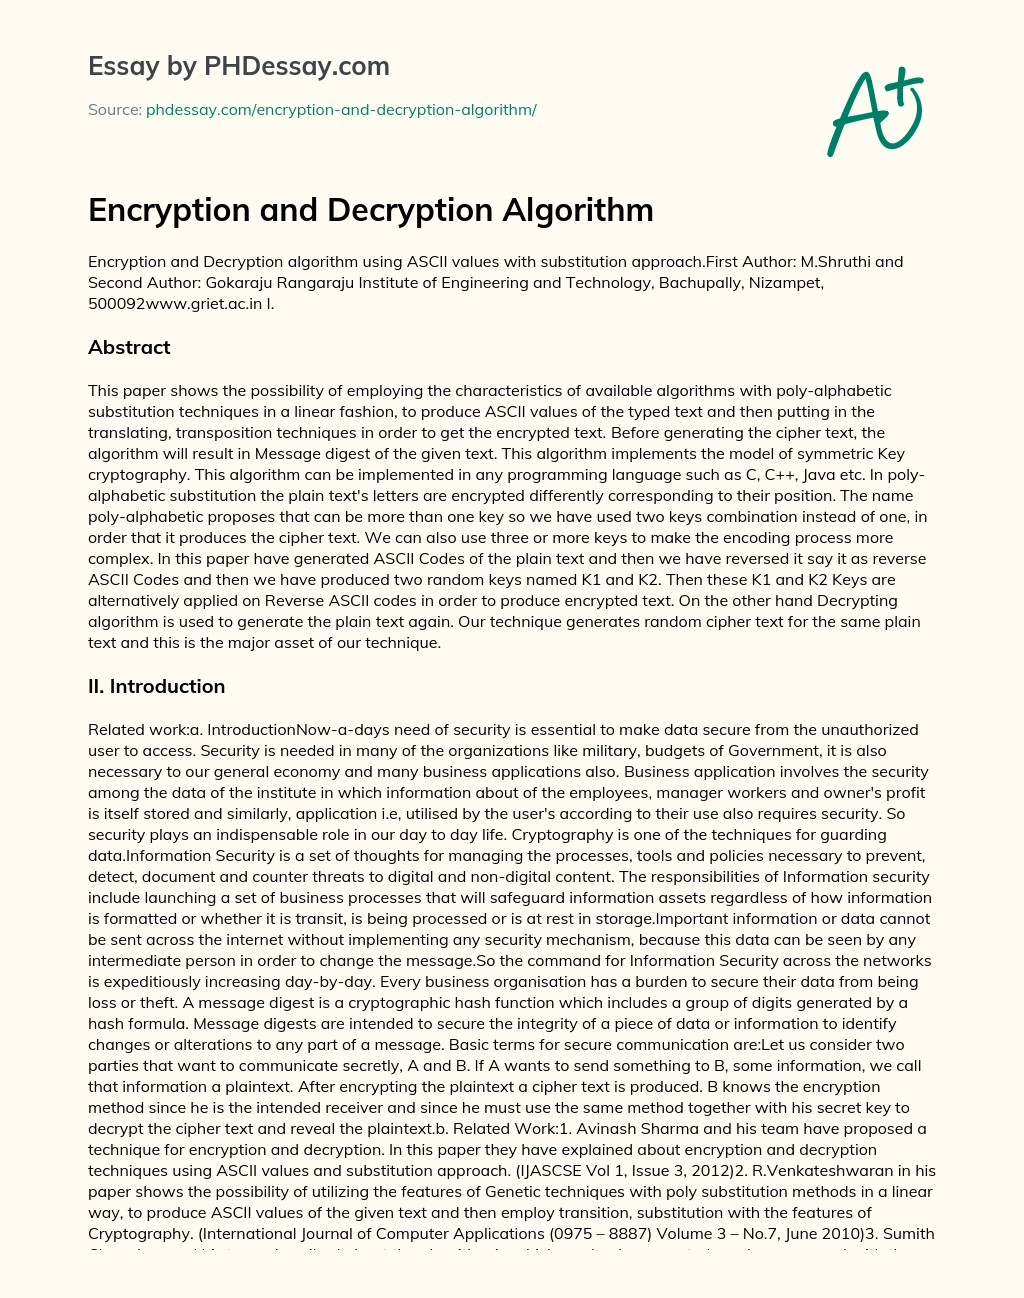 Encryption and Decryption Algorithm essay